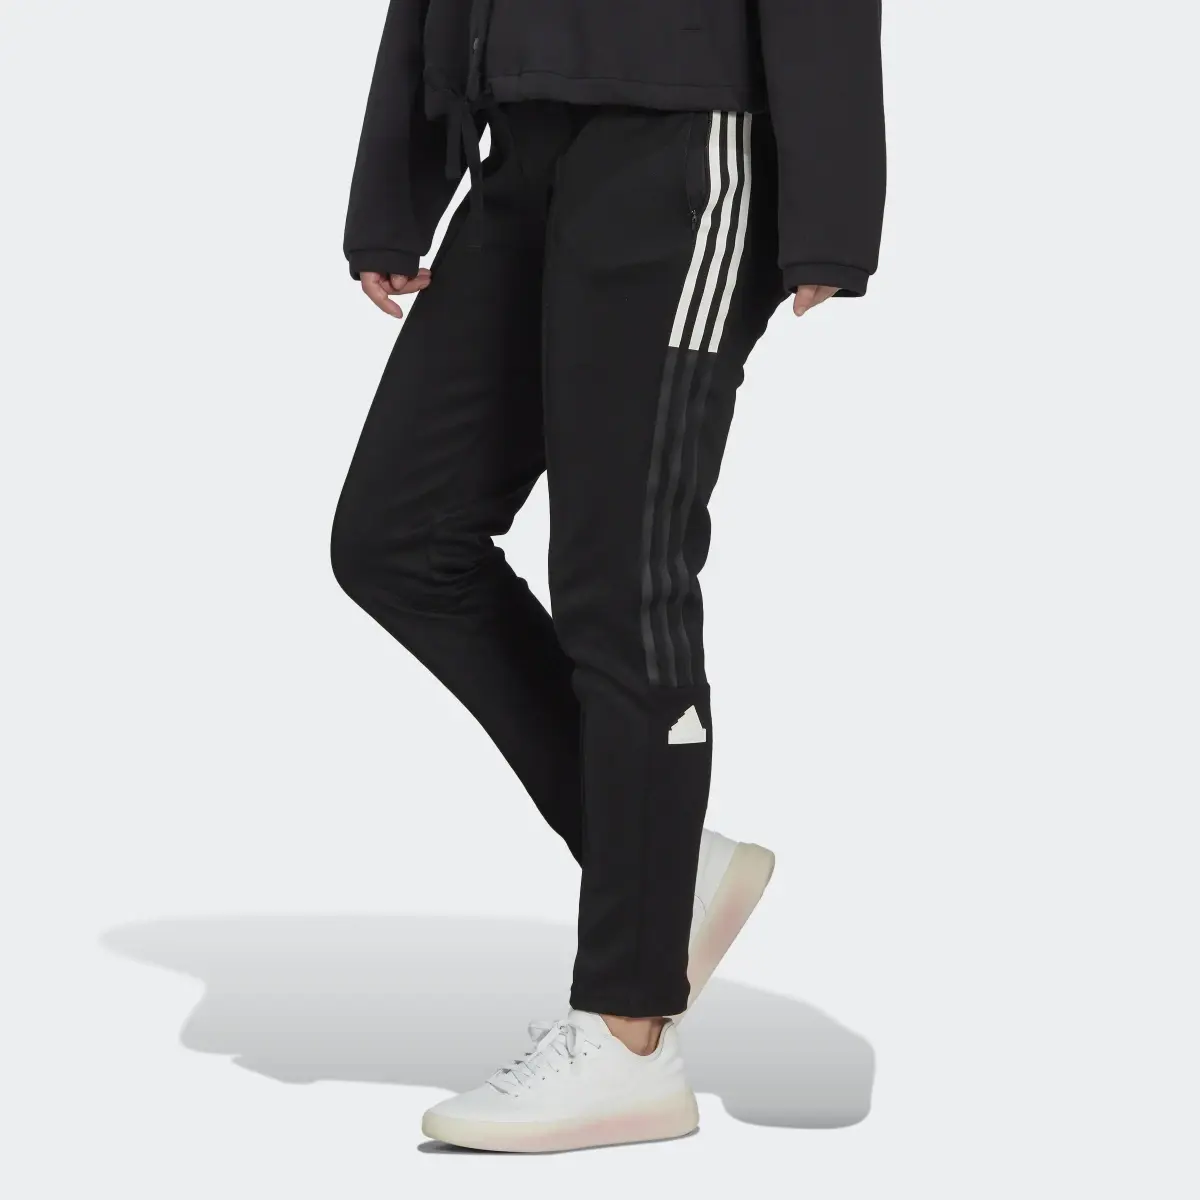 Adidas Tricot Pants. 1